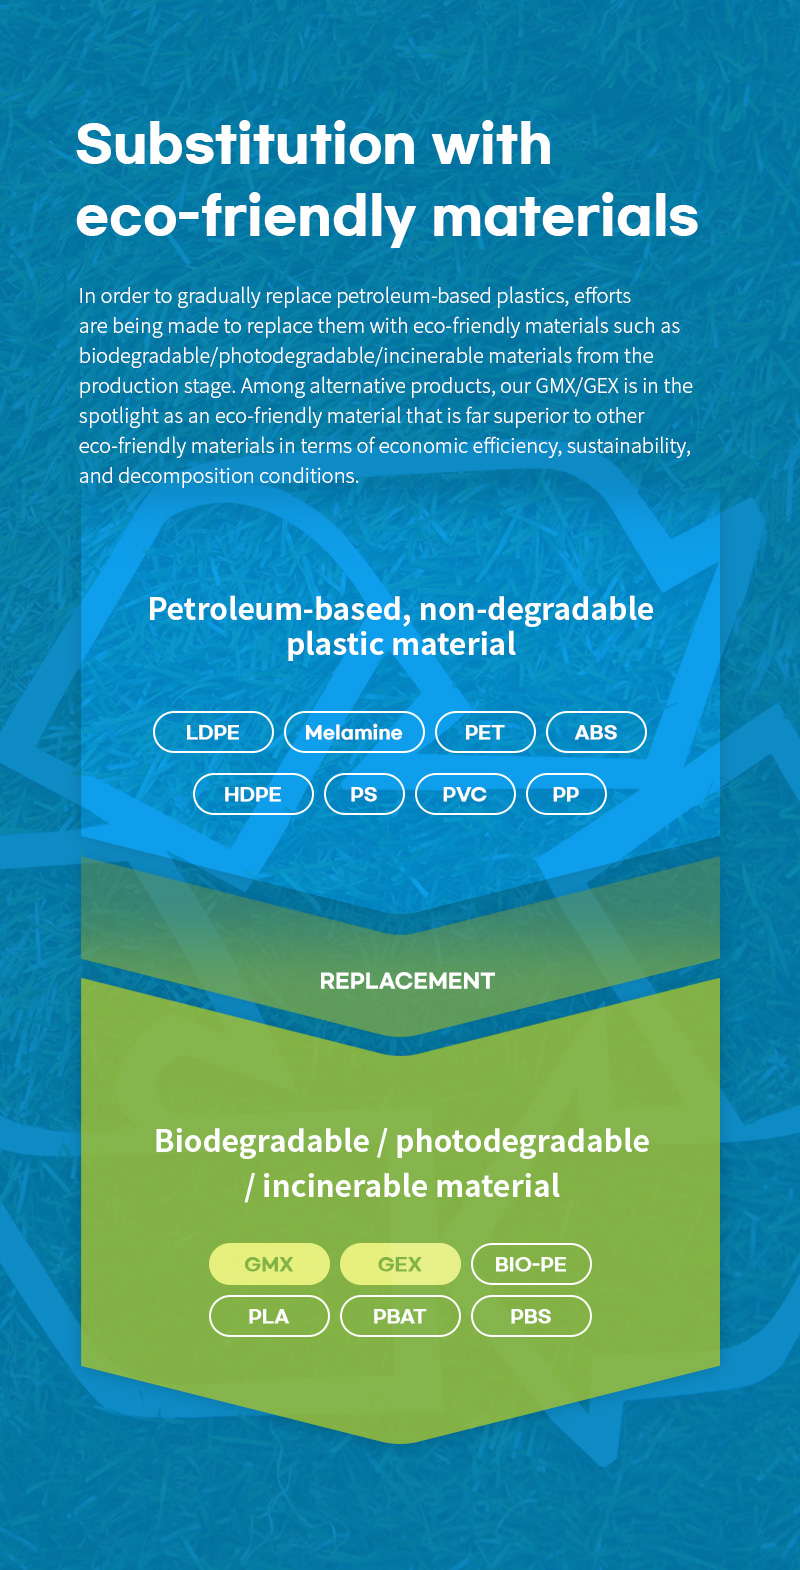 Biodegradable/photodegradable/incinerable material GMX, GEX, BIO-PE, PLA, PBAT, PBS